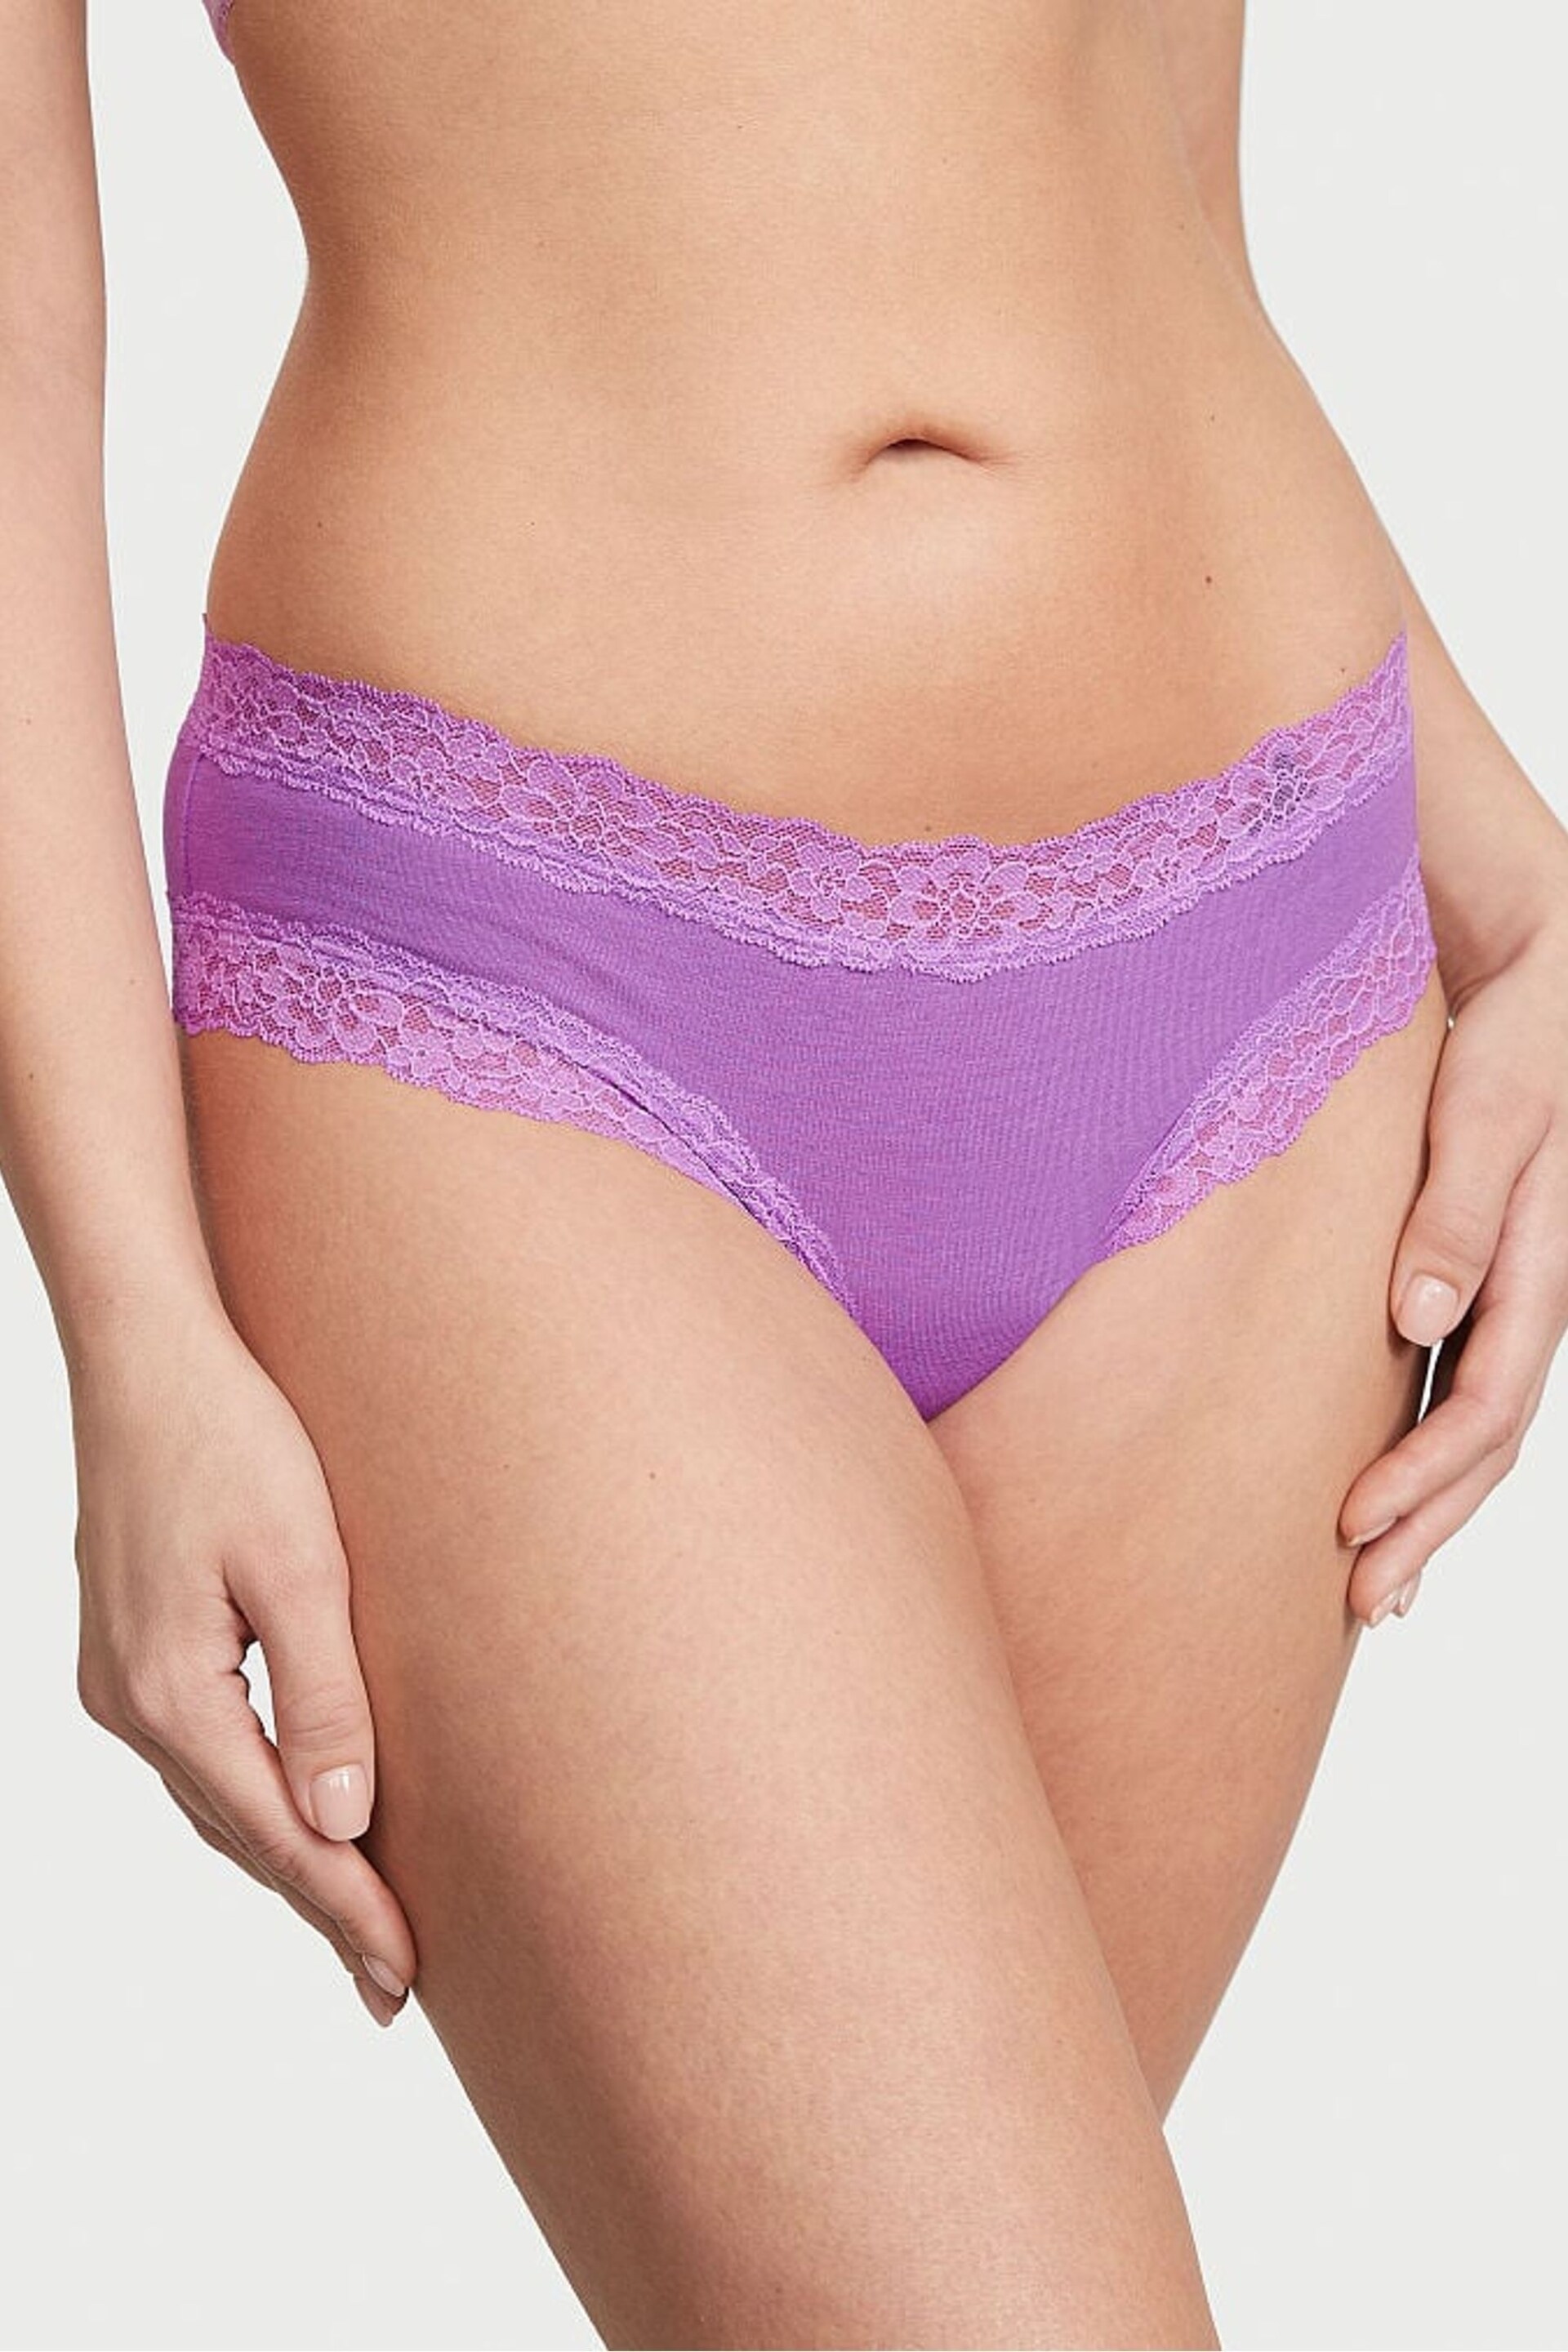 Victoria's Secret Purple Paradise Lace Waist Cheeky Knickers - Image 1 of 3